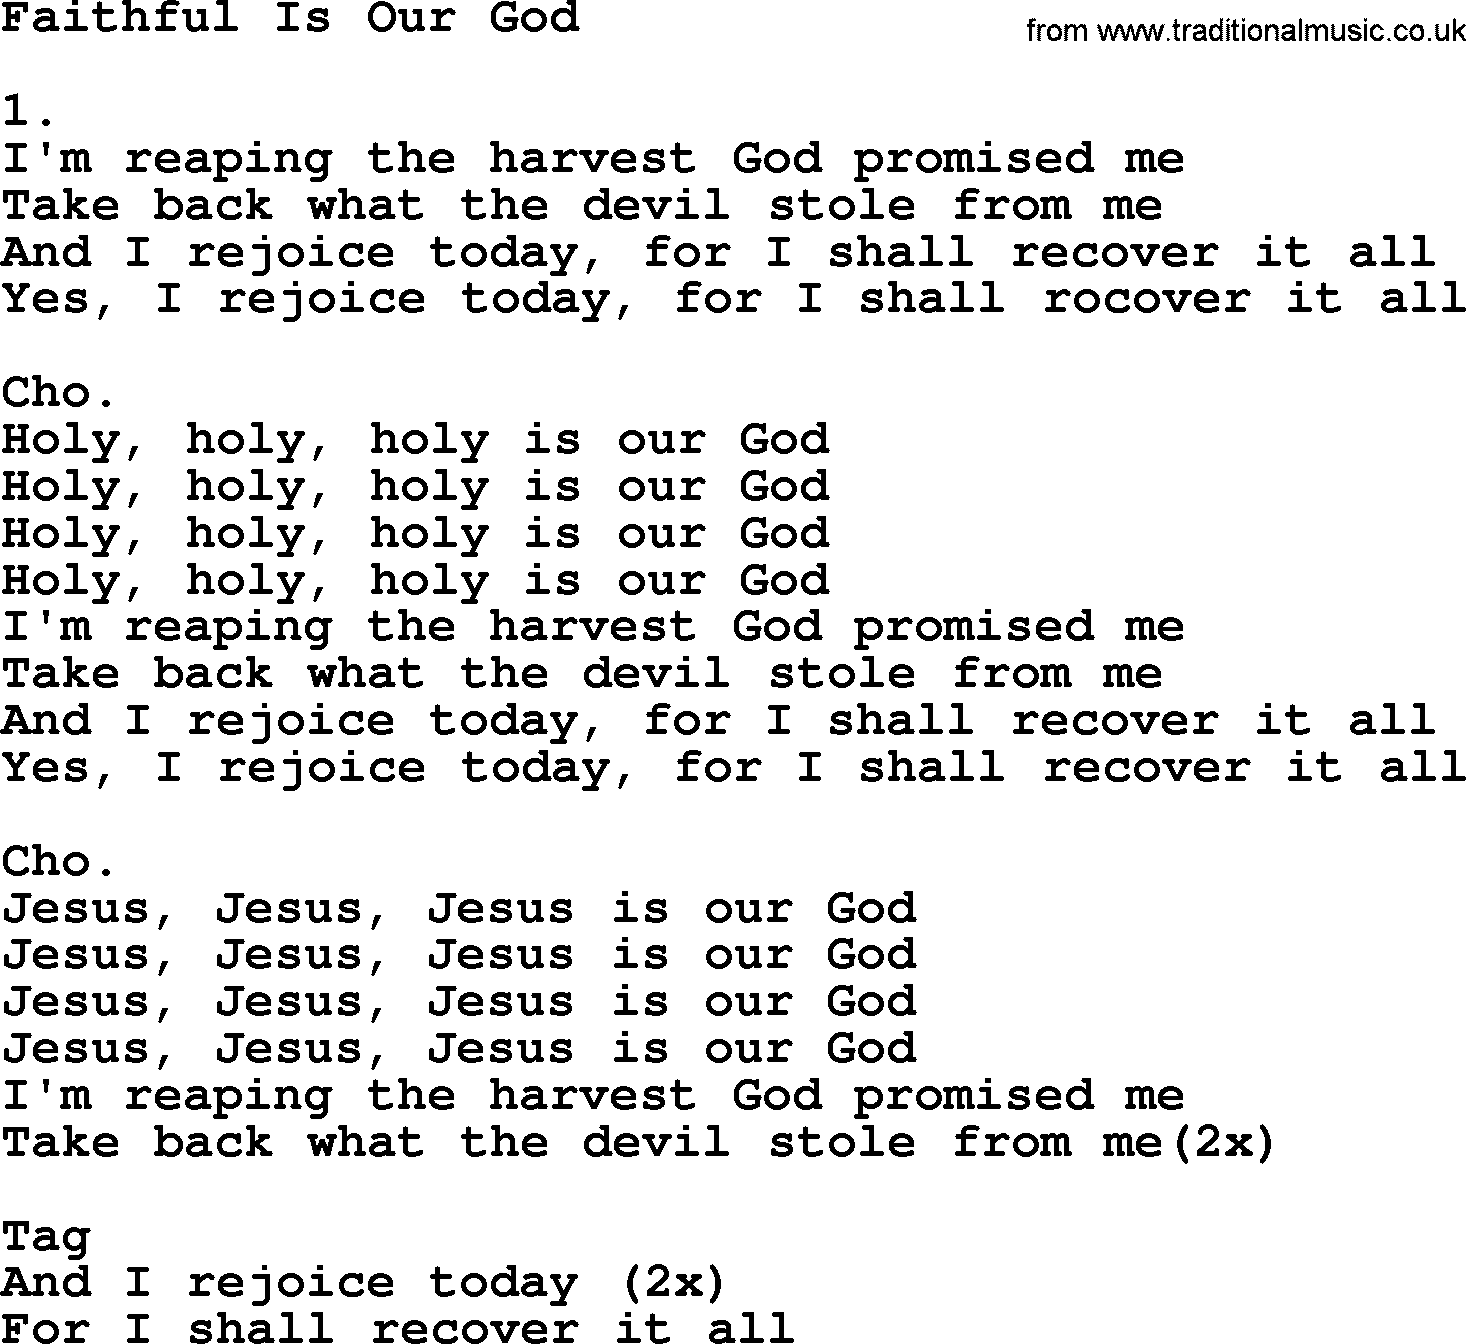 Apostolic & Pentecostal Hymns and Songs, Hymn: Faithful Is Our God lyrics and PDF